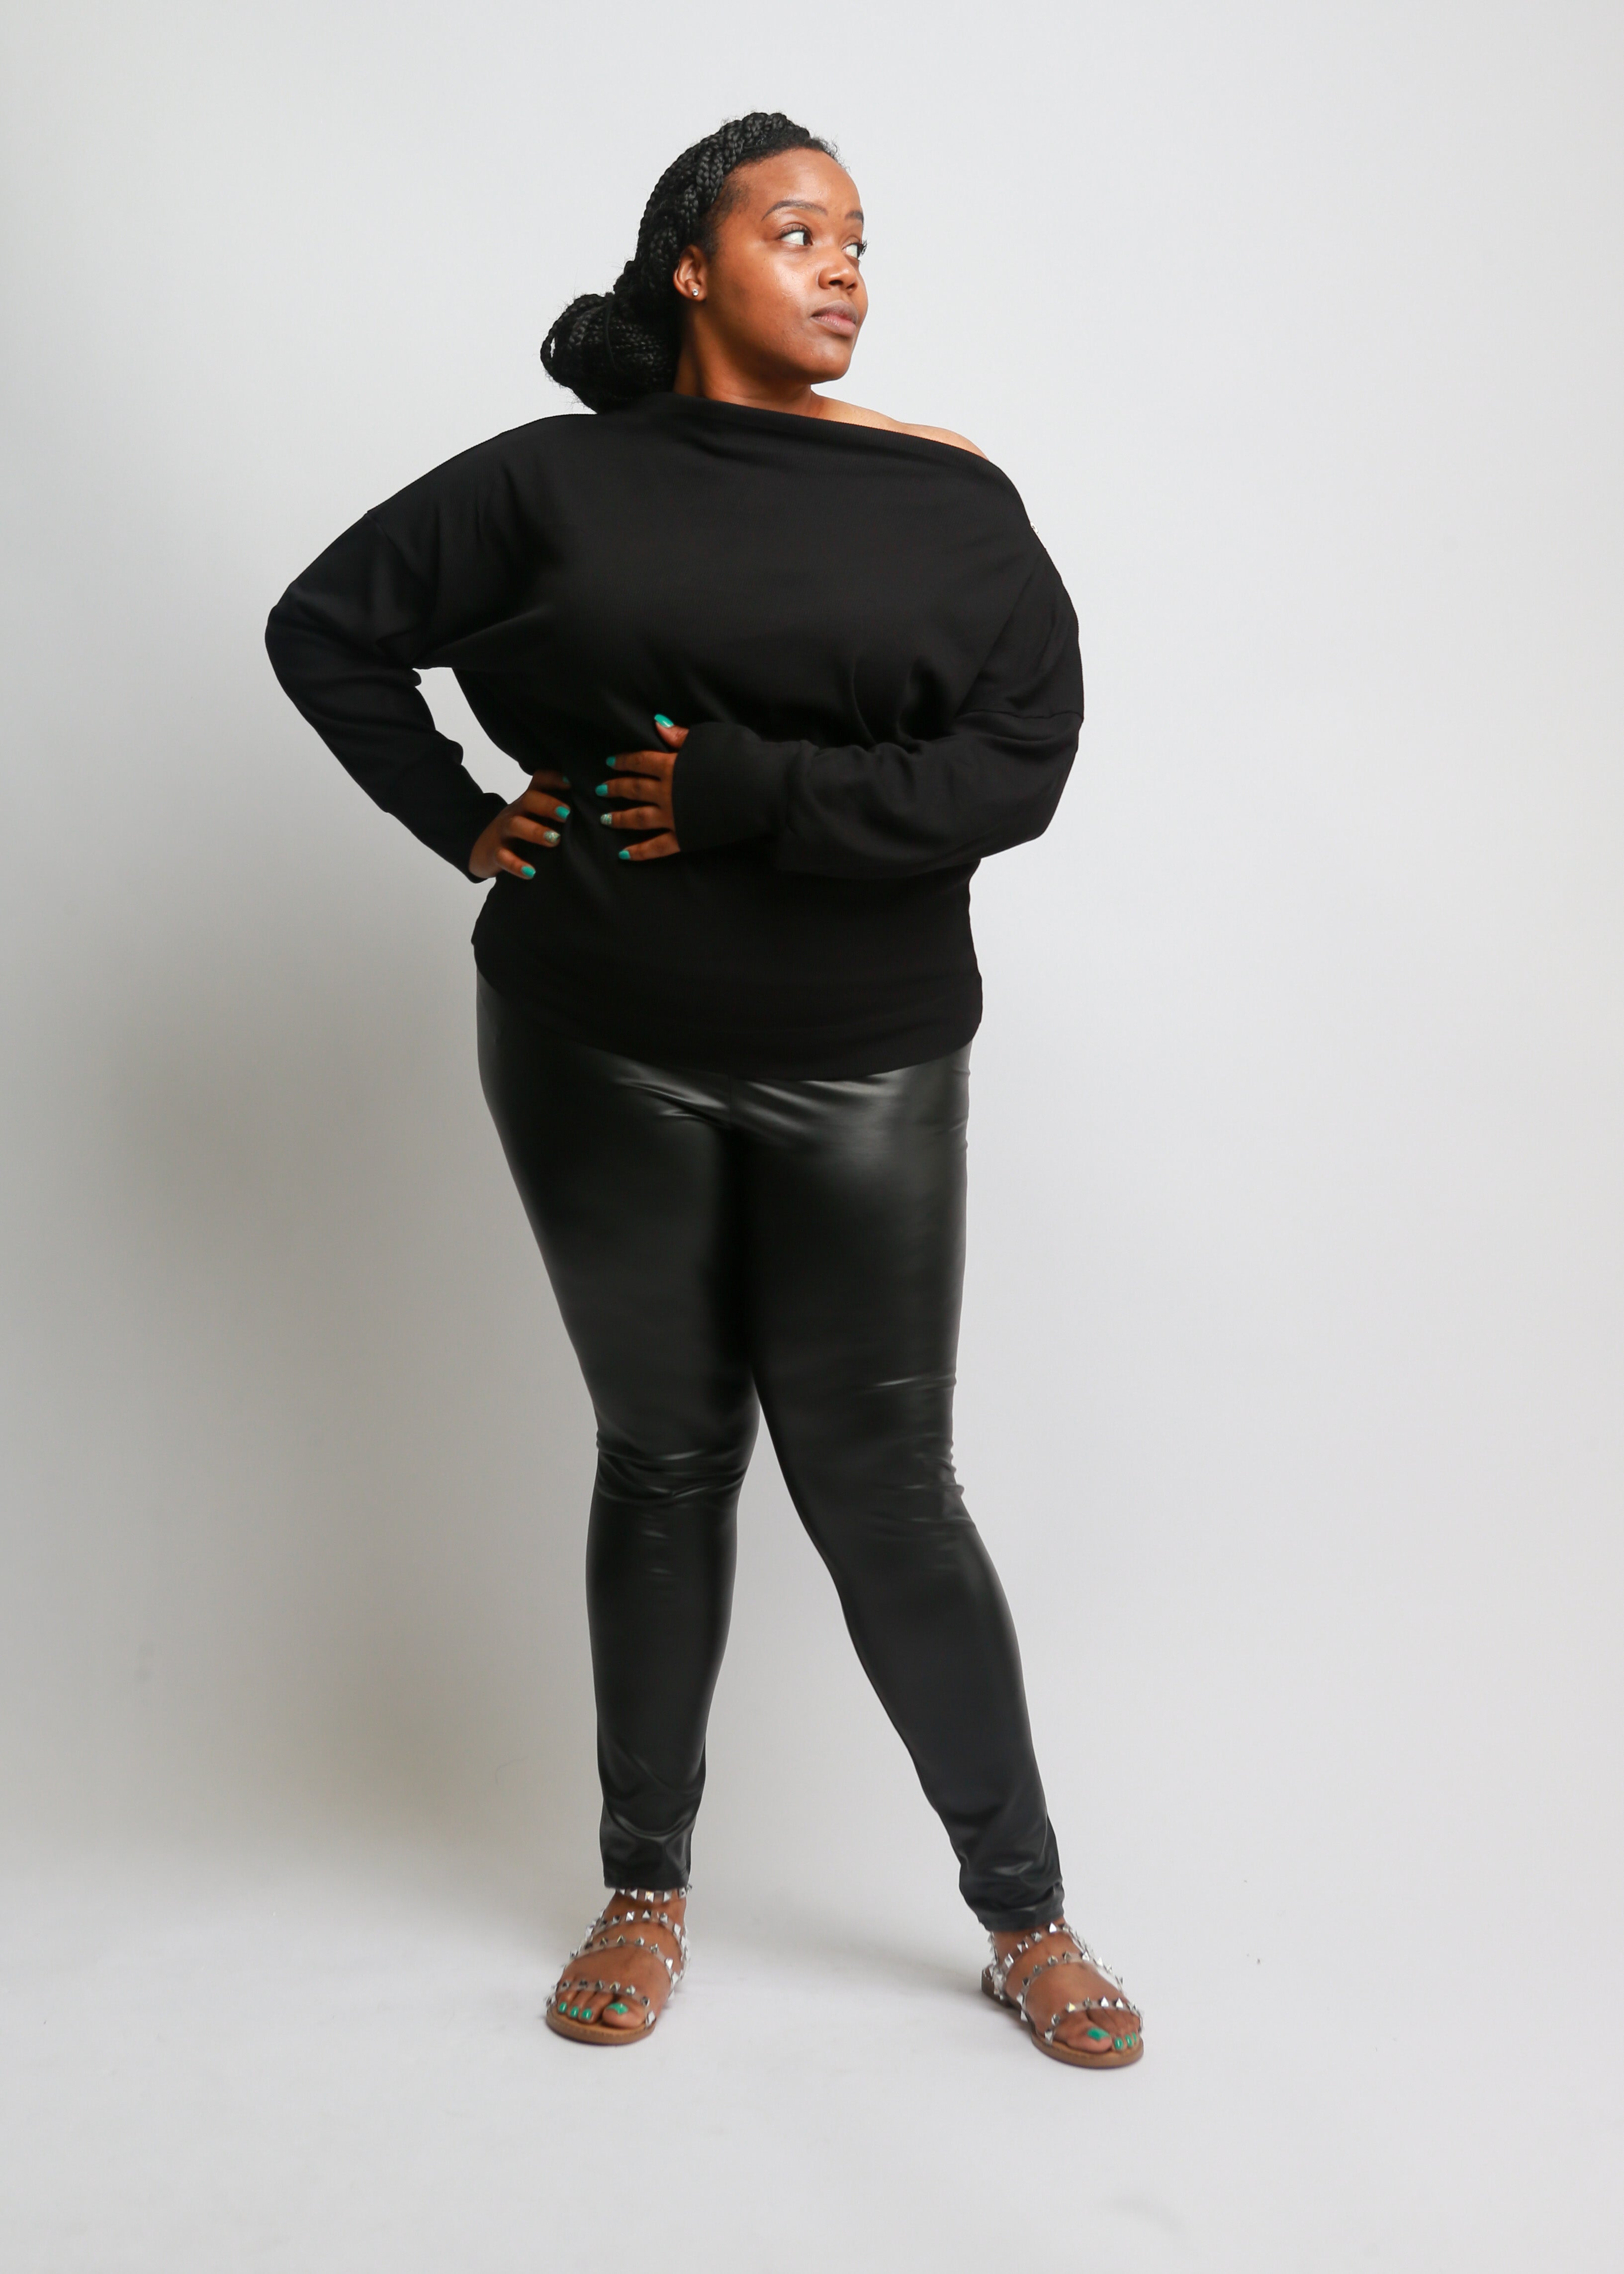 Buy Bycc Bynn Womens Black Faux Leather Leggings Plus Size Shape